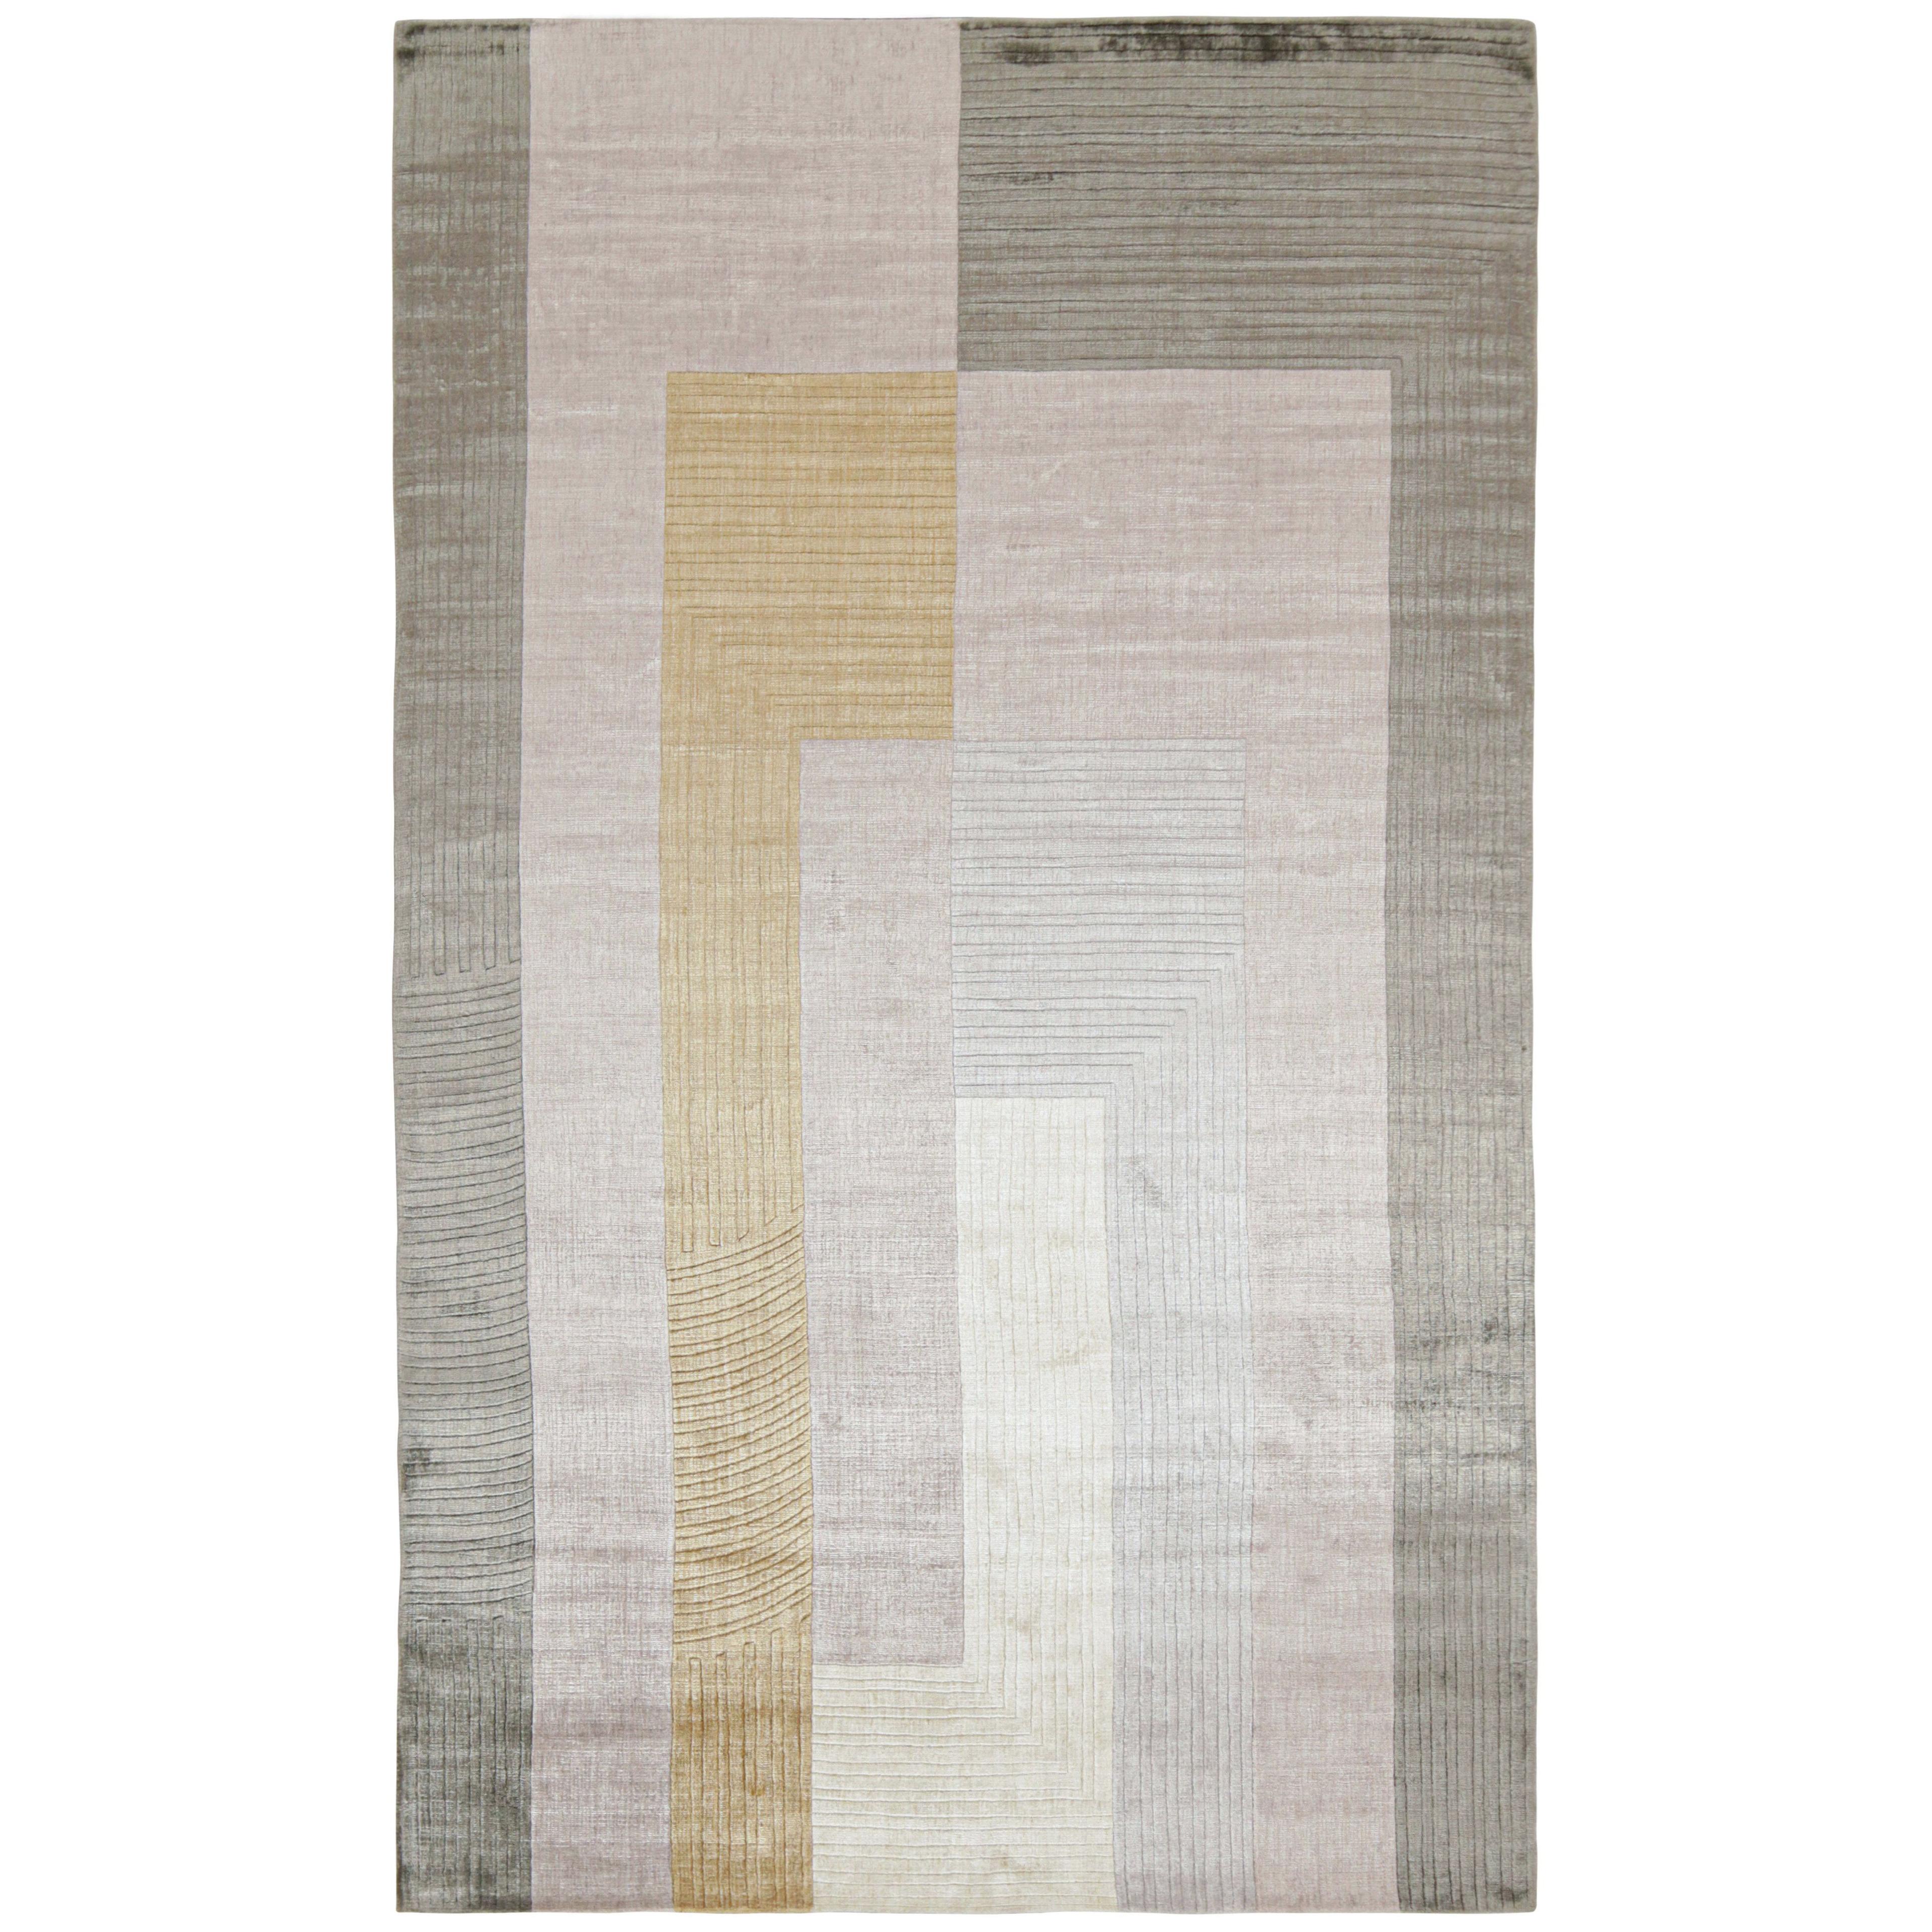 Rug & Kilim’s Modern rug in Lavender with Geometric Patterns